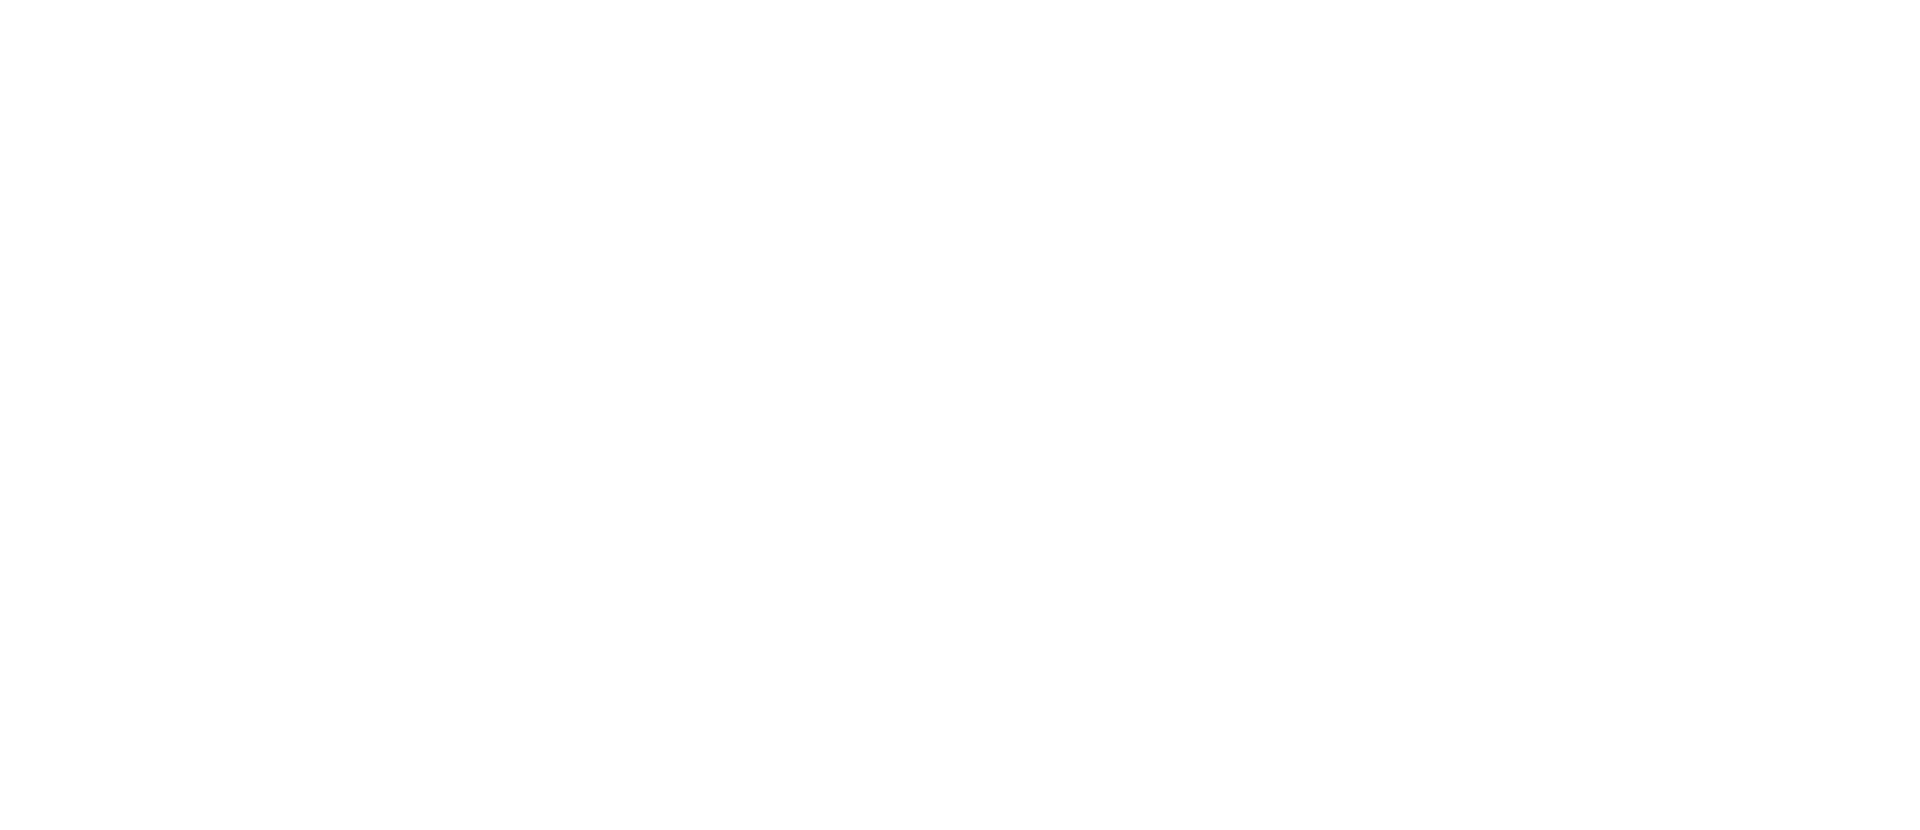 SpVgg Herblingen/Hochaltingen Title Image